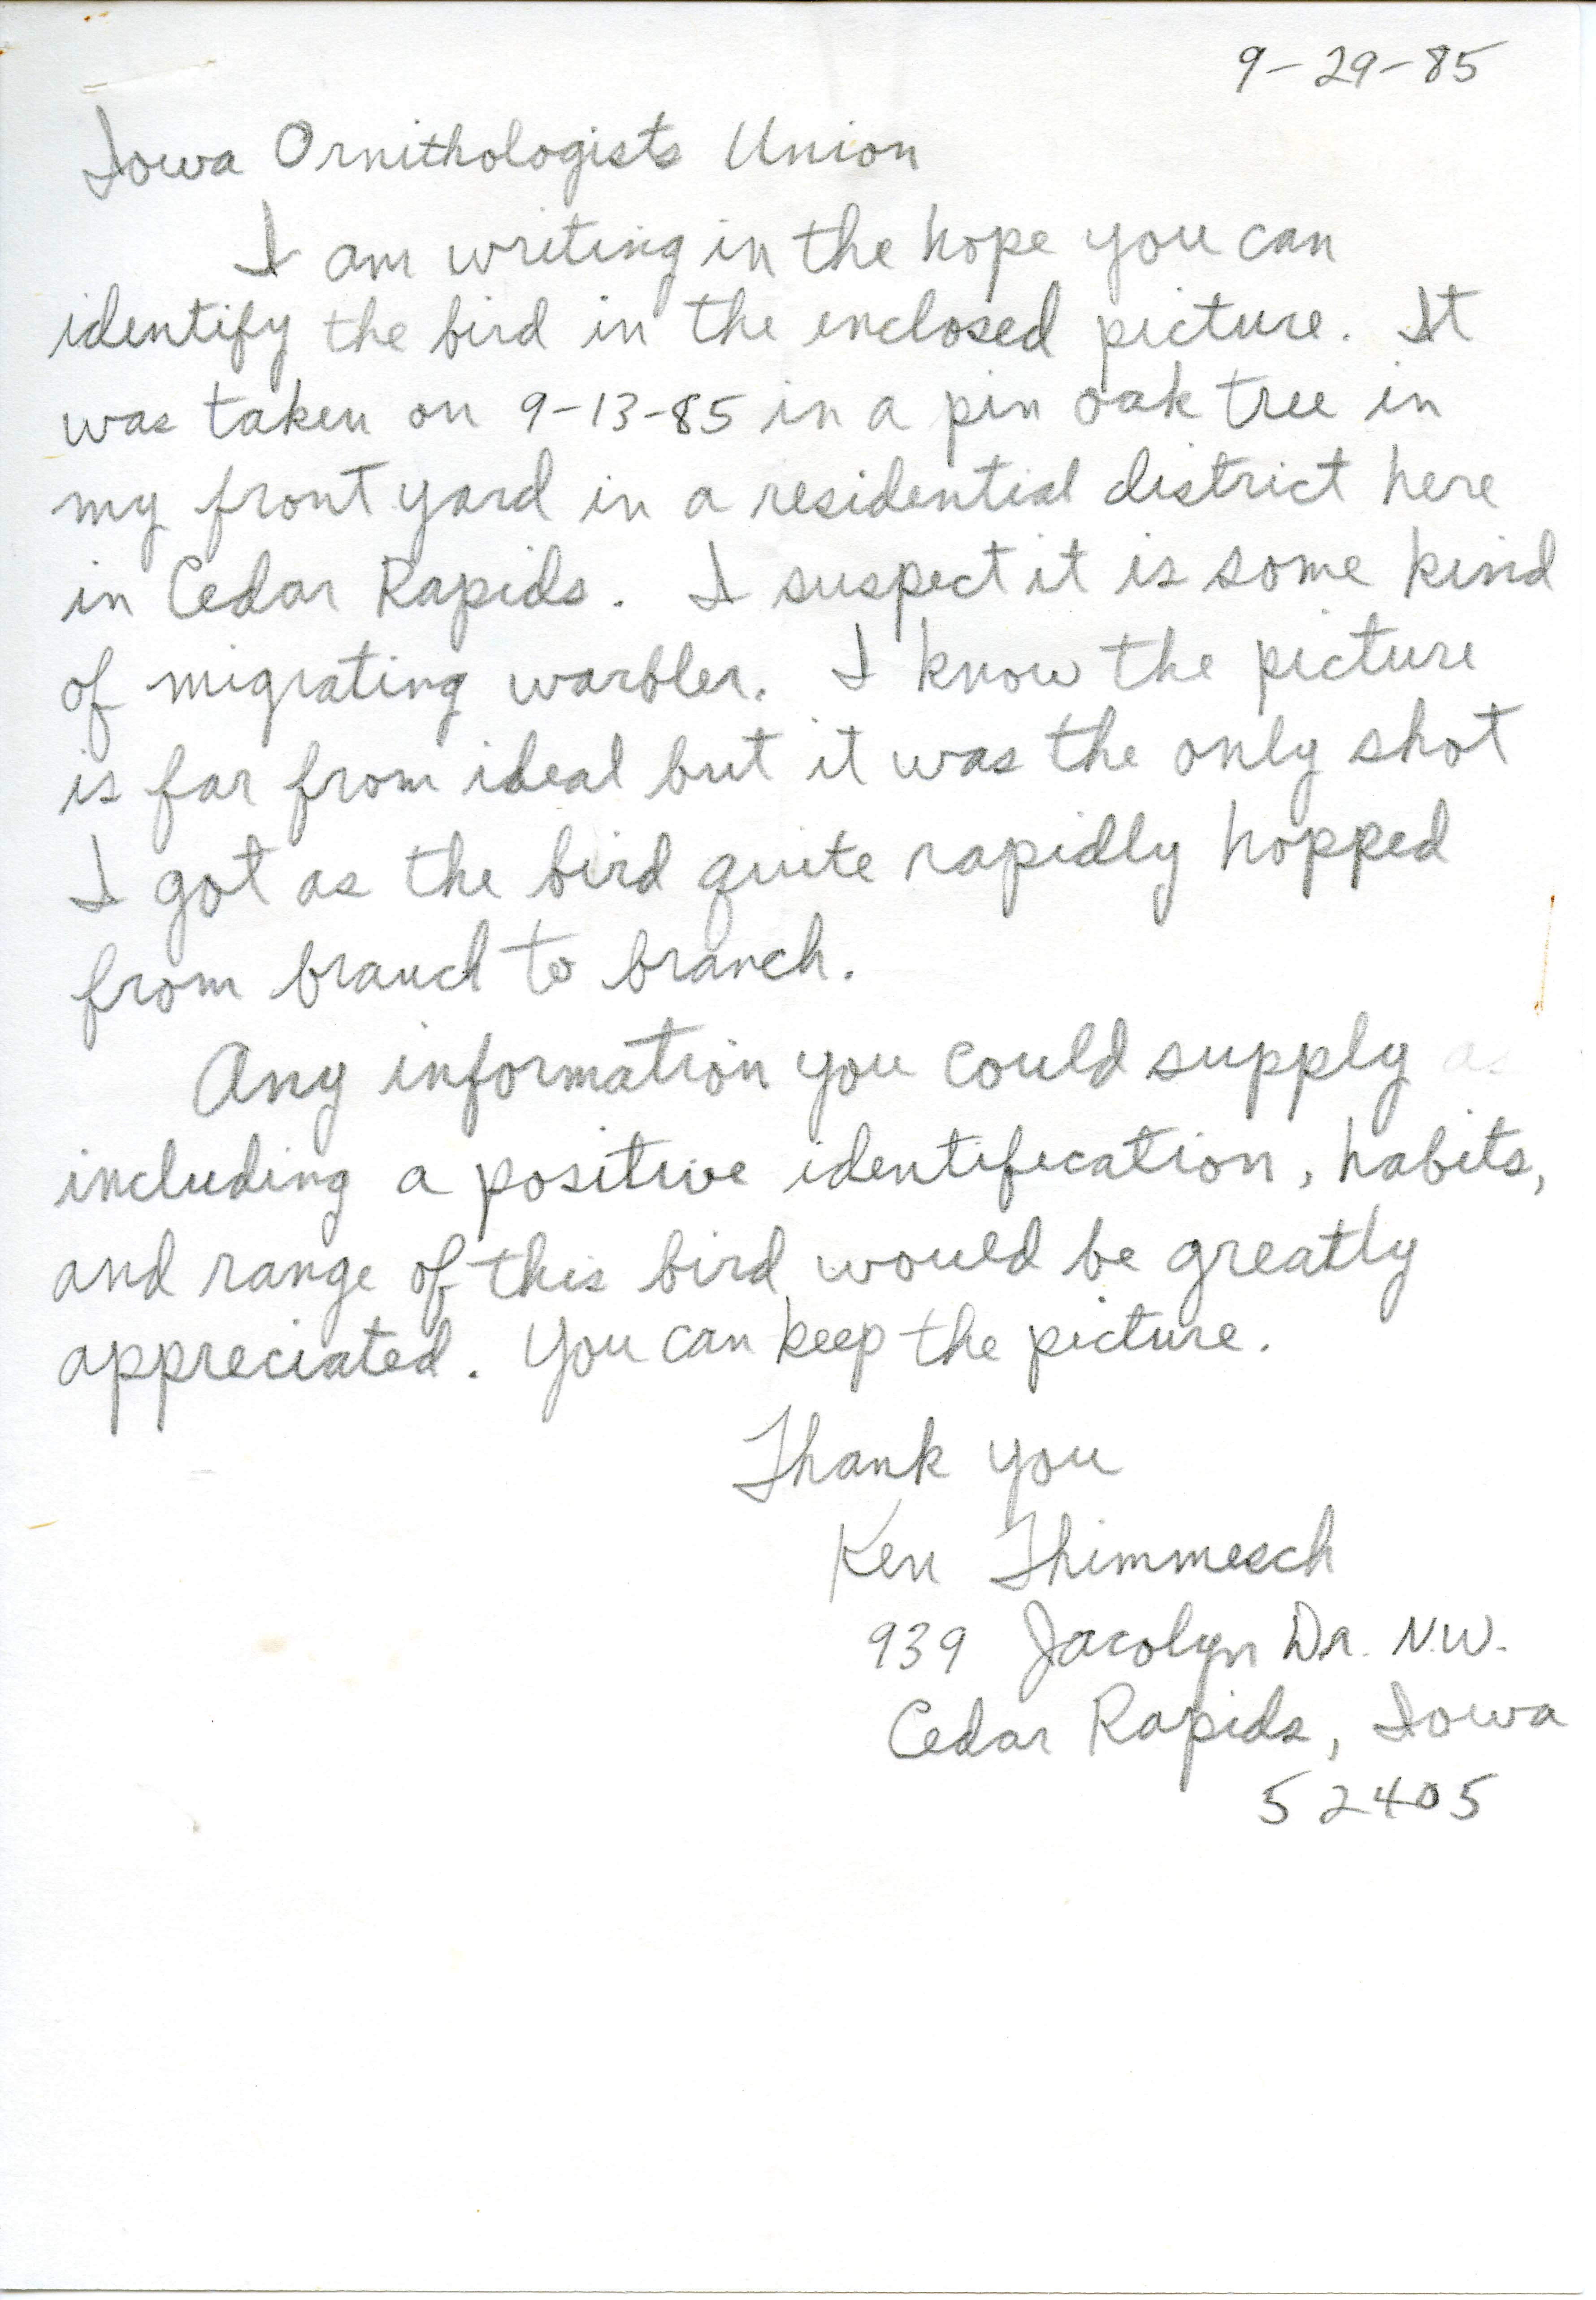 Ken Thimmesch letter to Iowa Ornithologists Union regarding unidentified Warbler, September 29, 1985